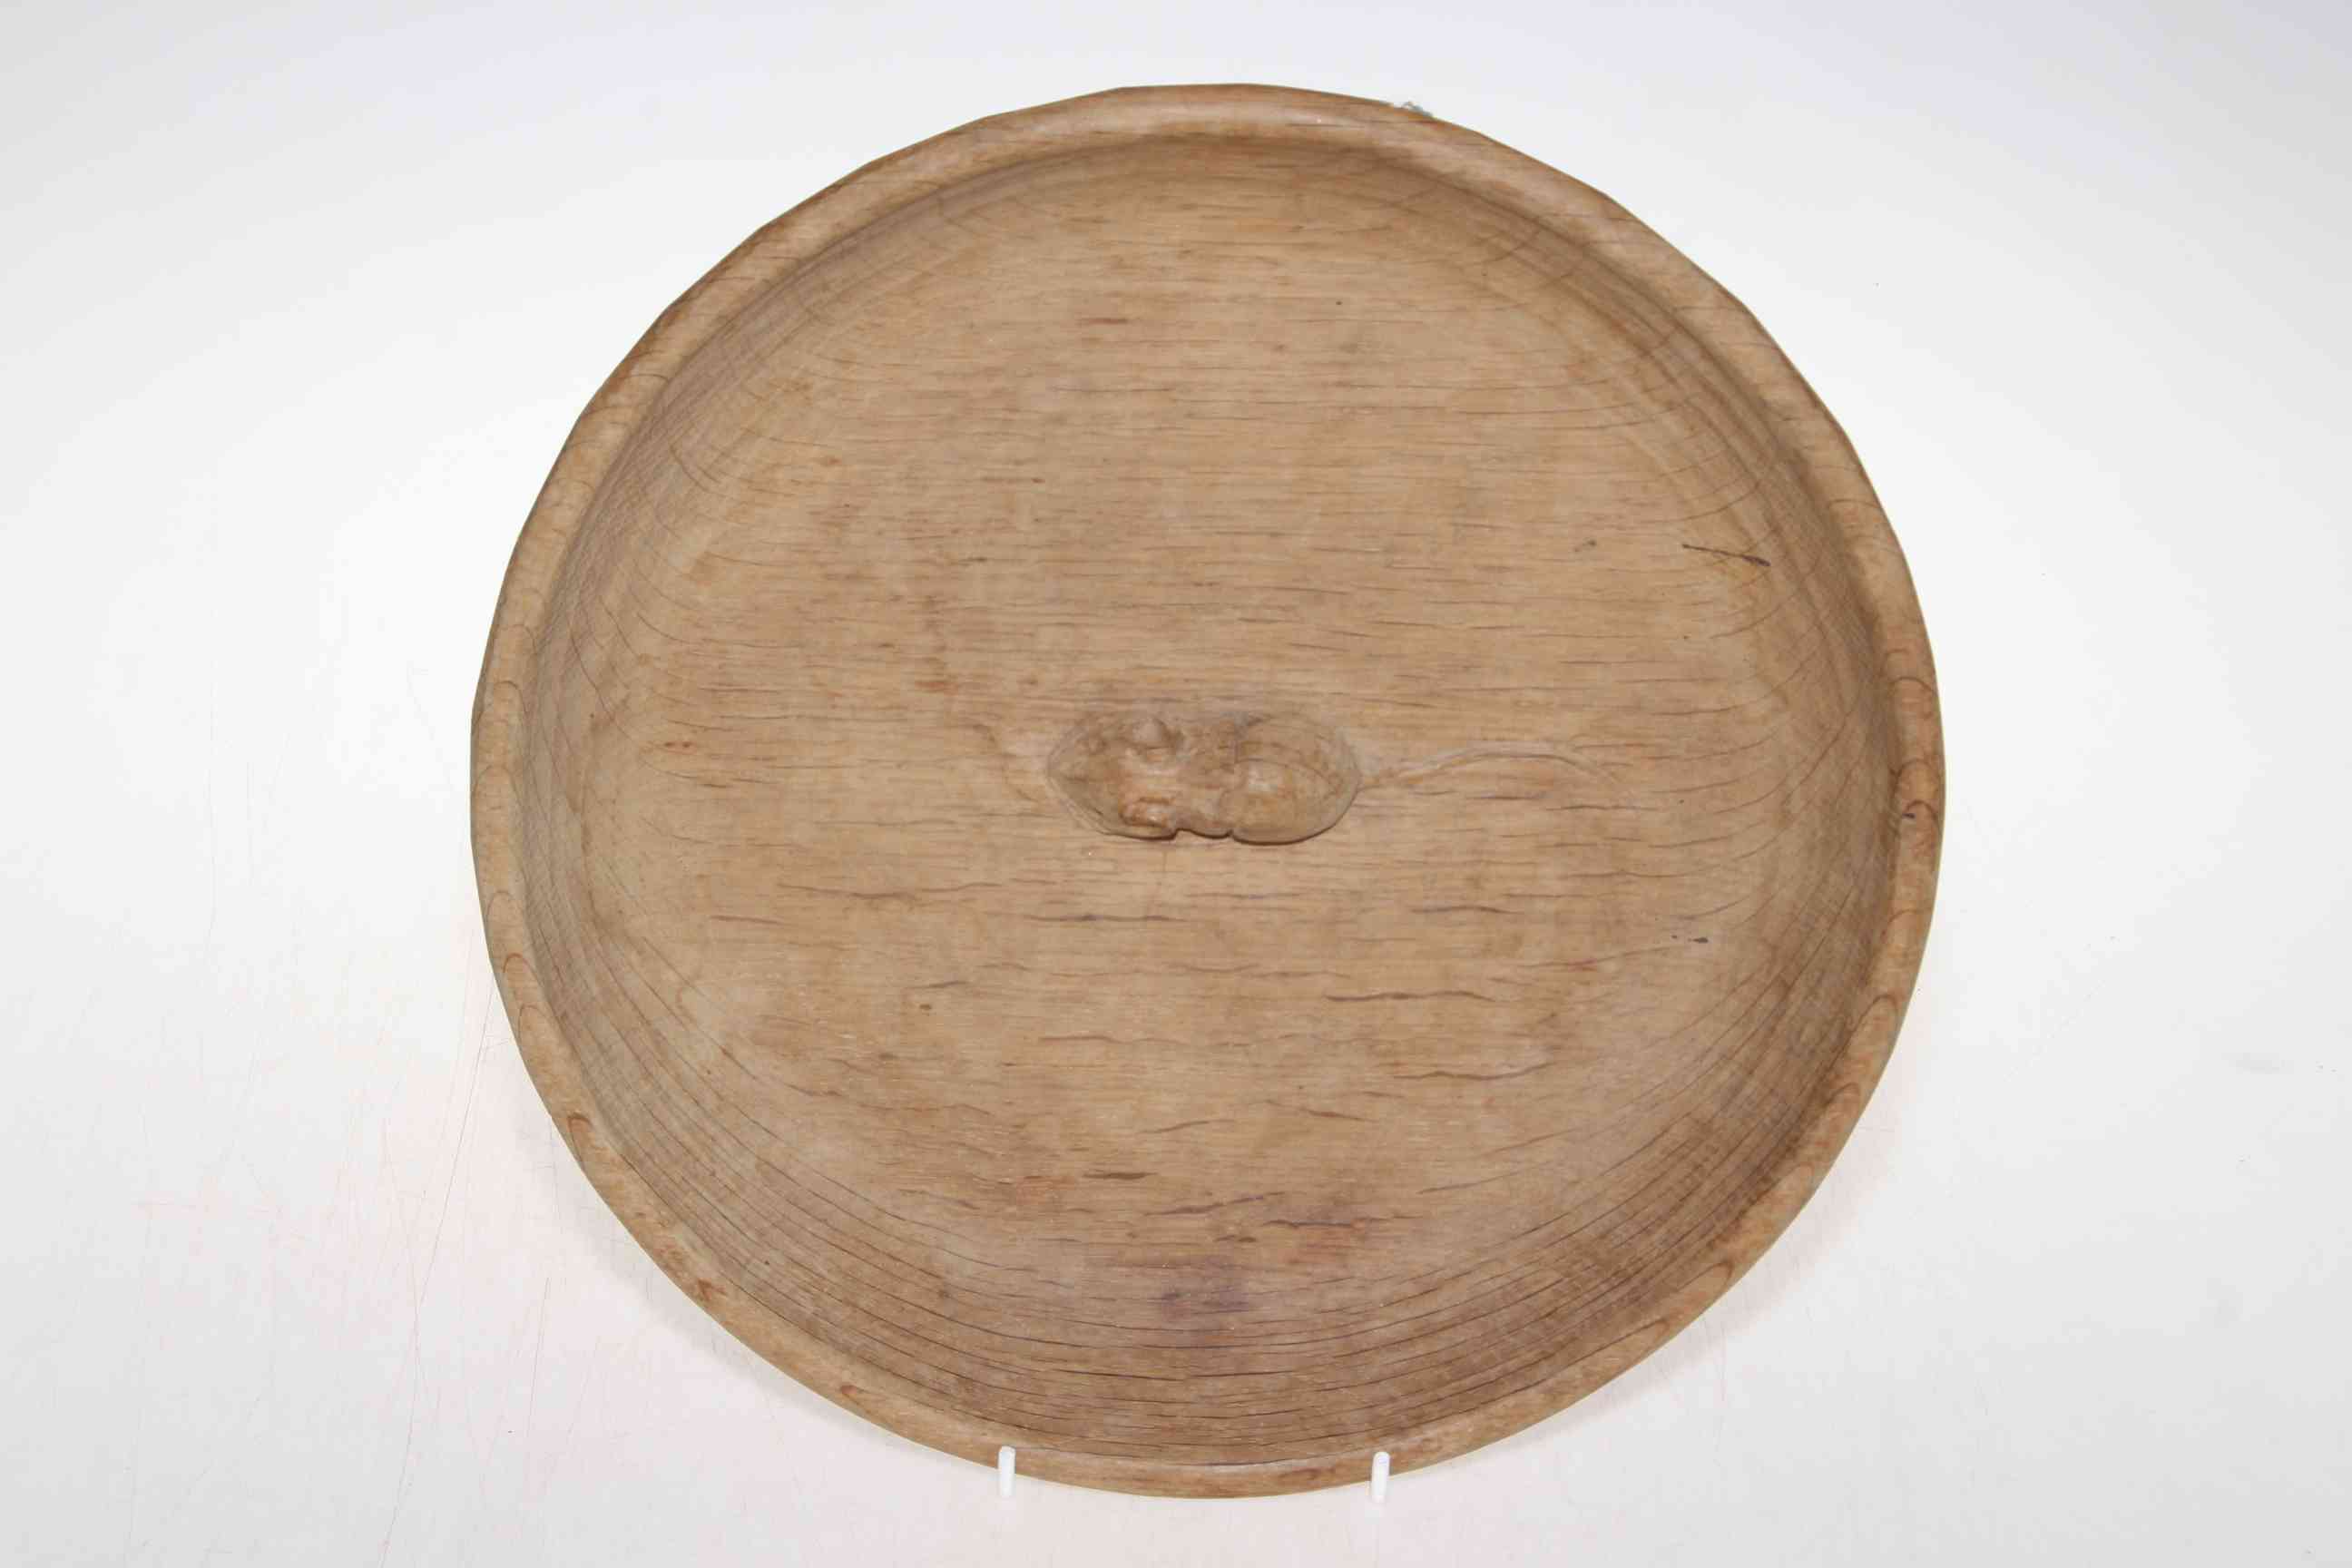 Mouseman fruit bowl, 29.5cm diameter.